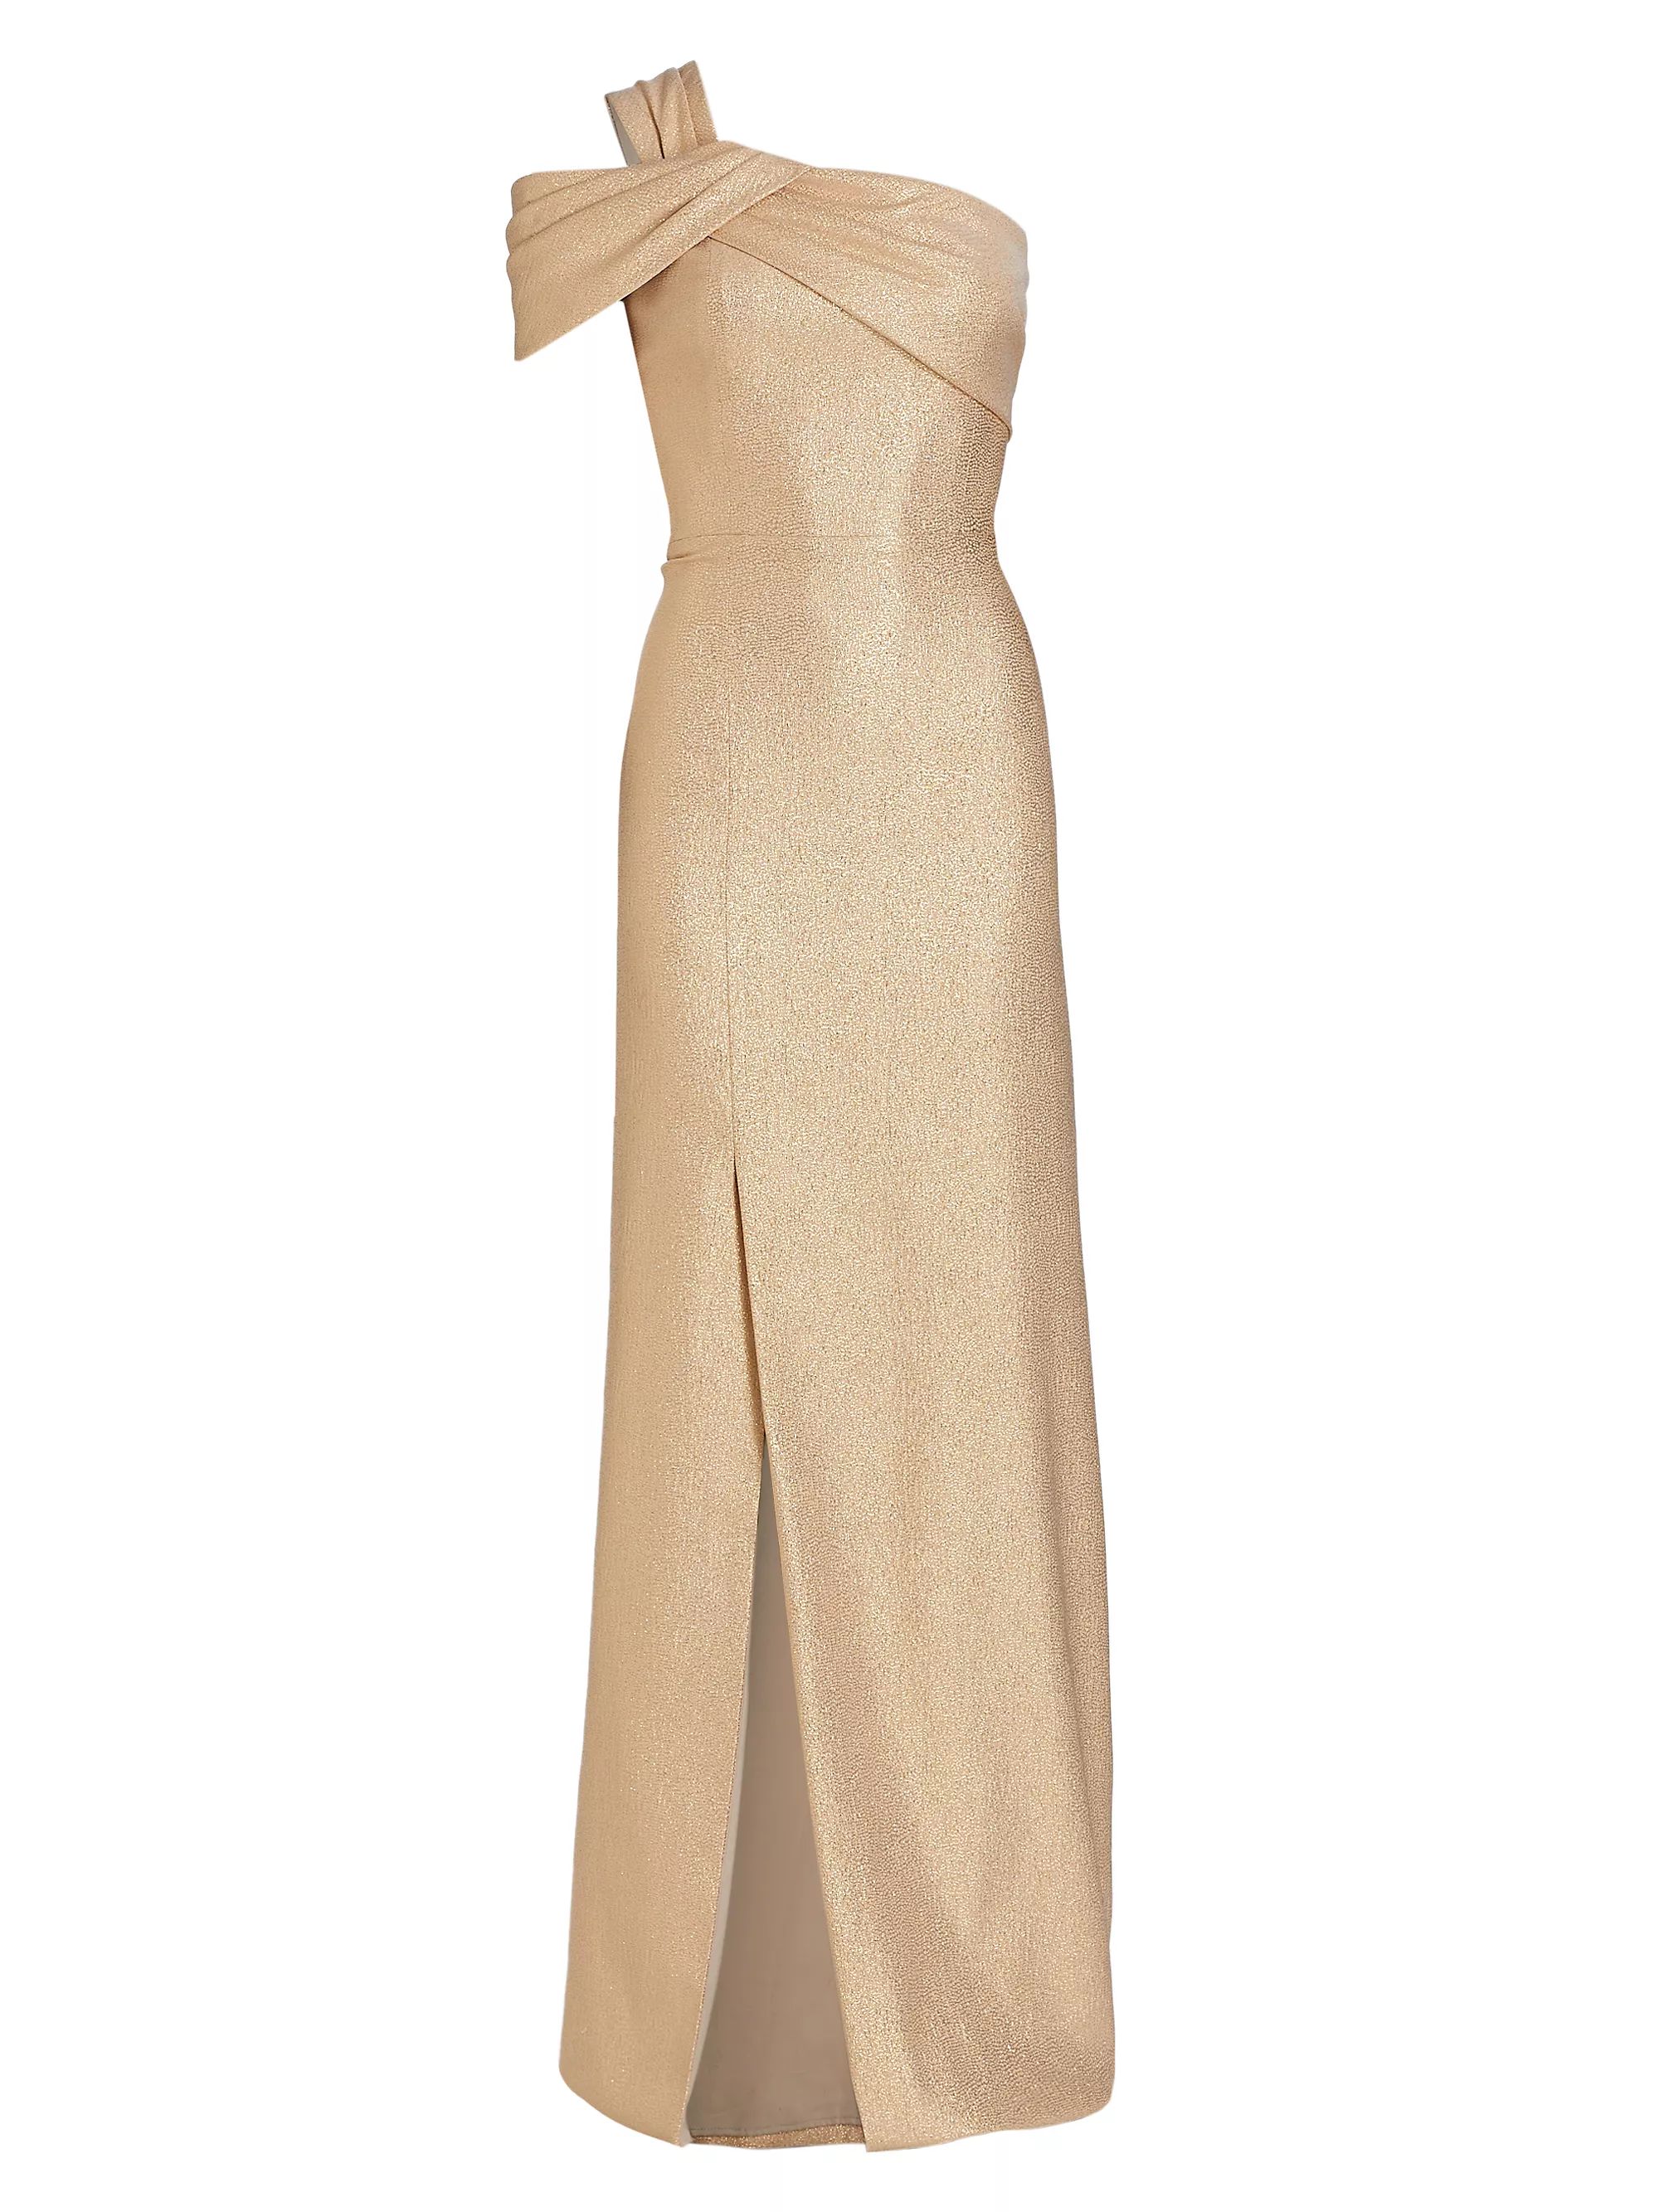 Shop Teri Jon by Rickie Freeman One-Shoulder Metallic-Jacquard Gown | Saks Fifth Avenue | Saks Fifth Avenue